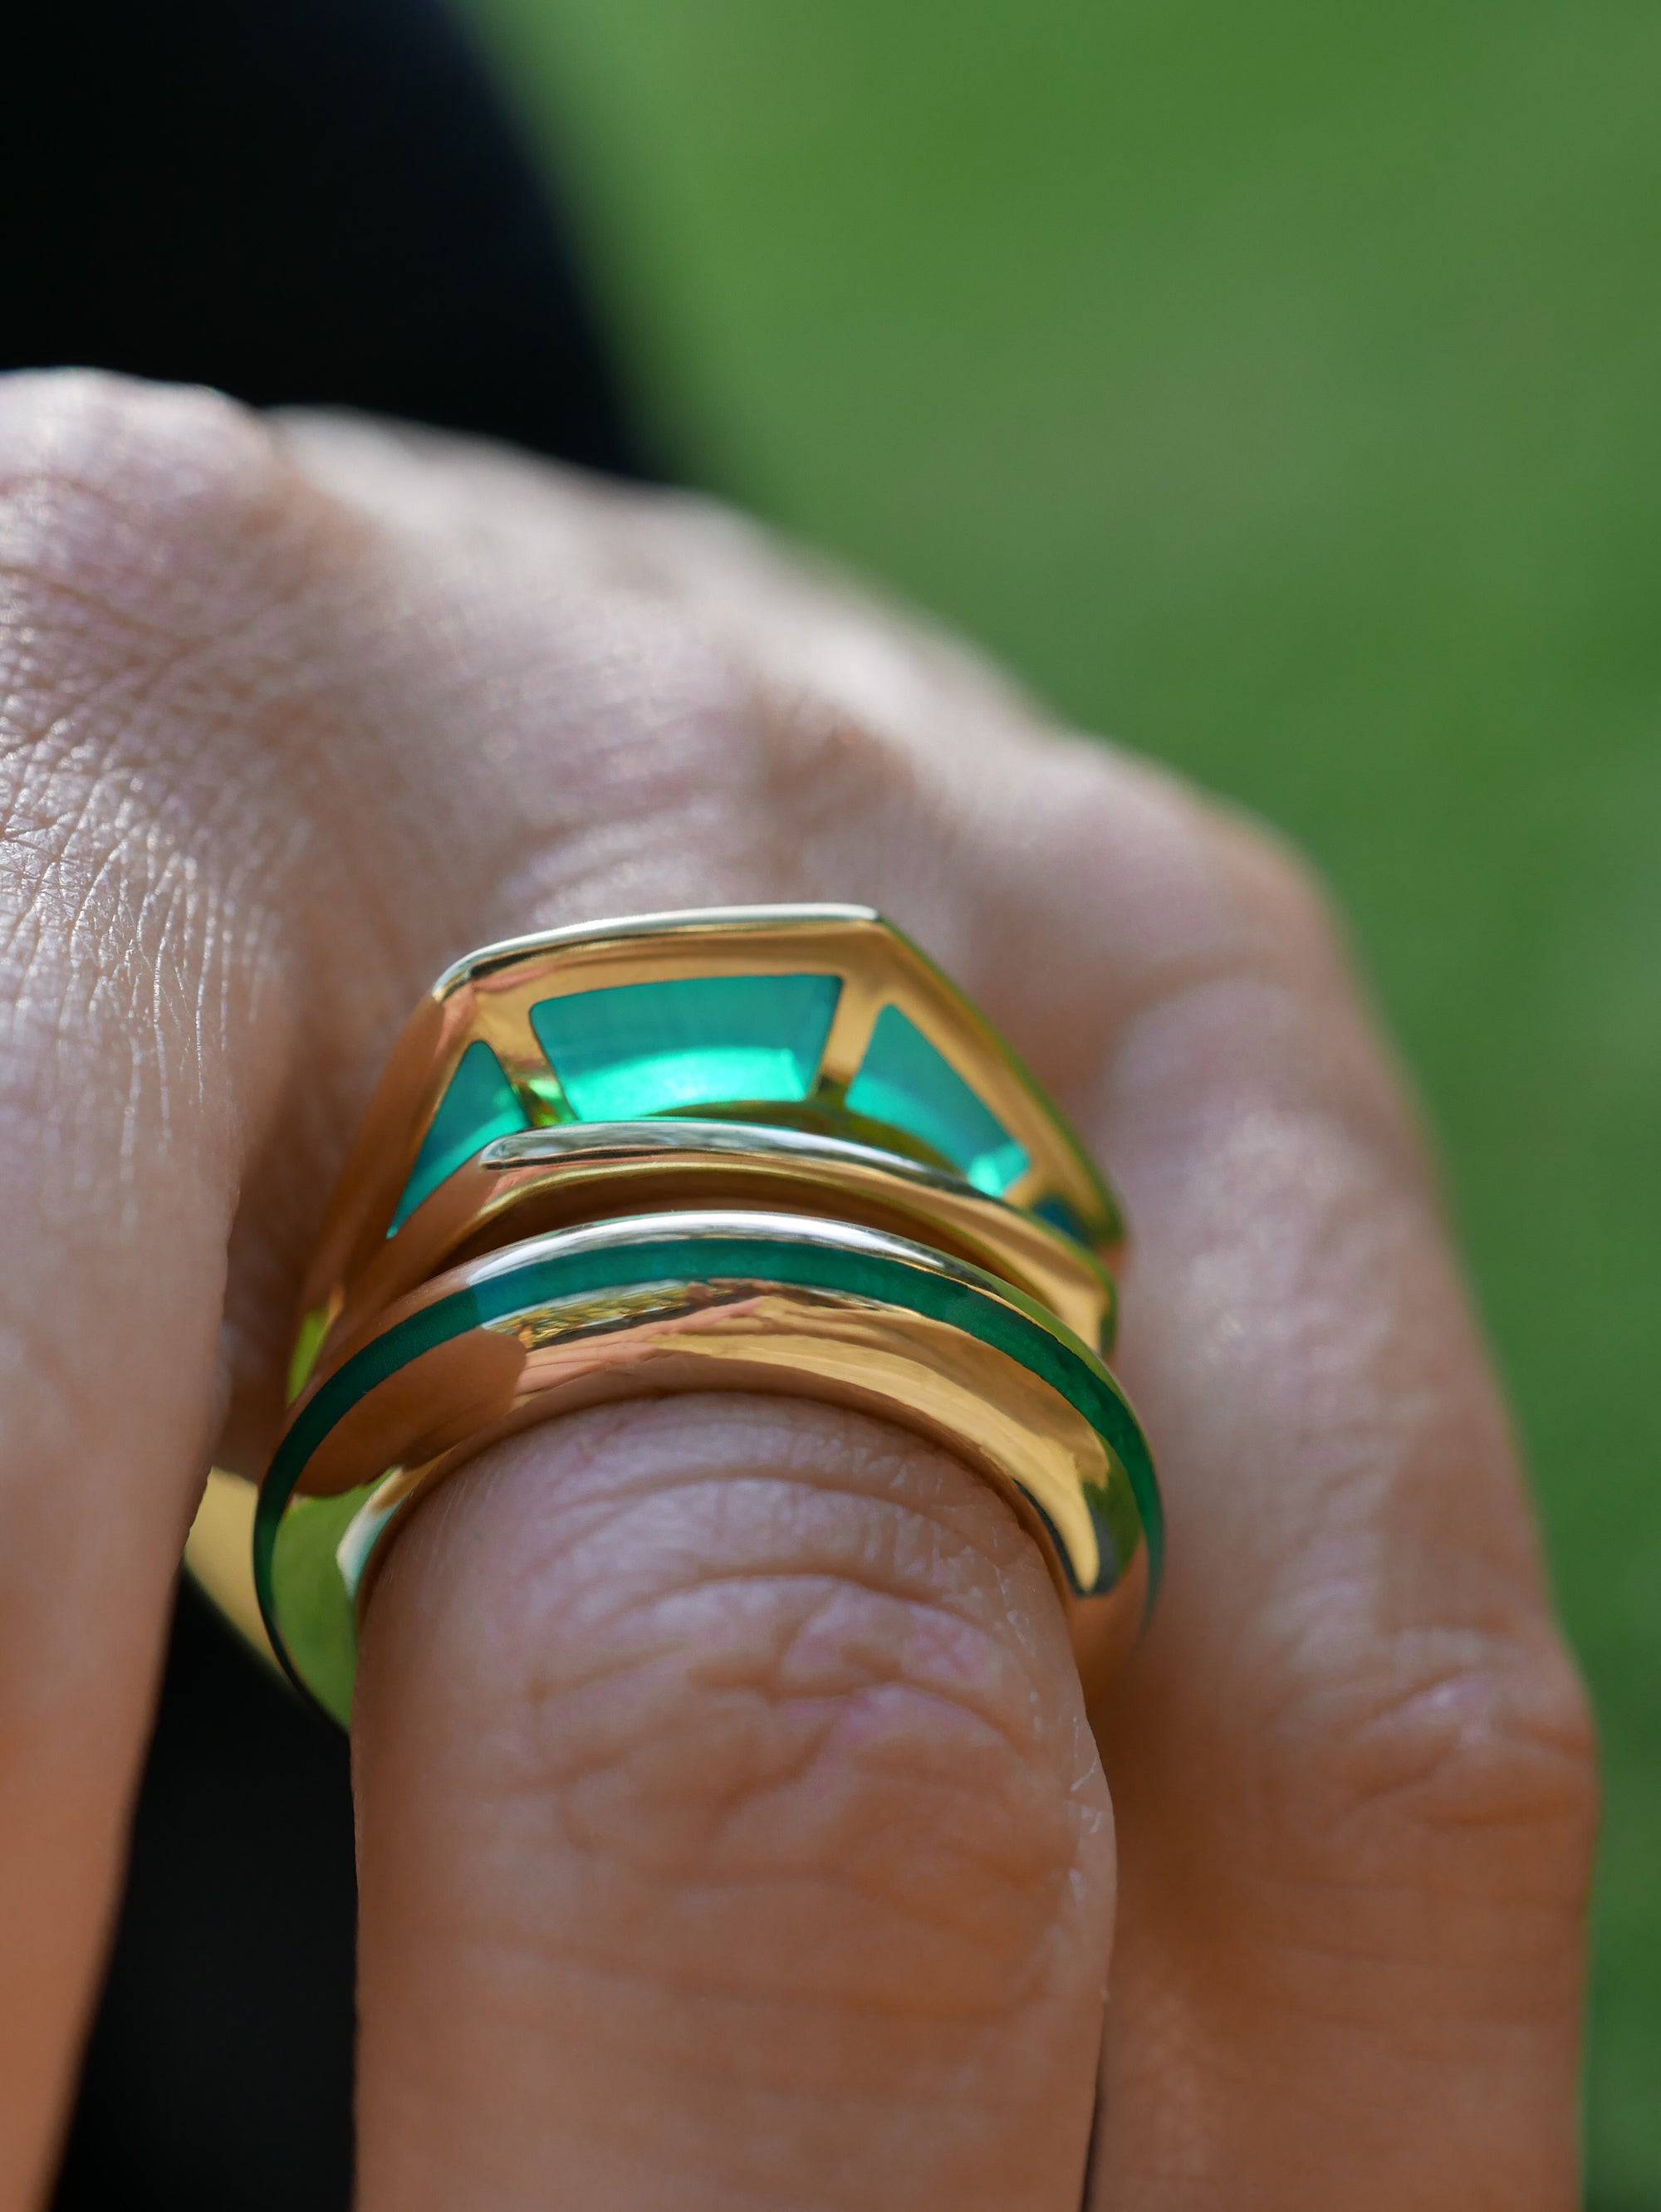 Cobra Ring with Green Enamel